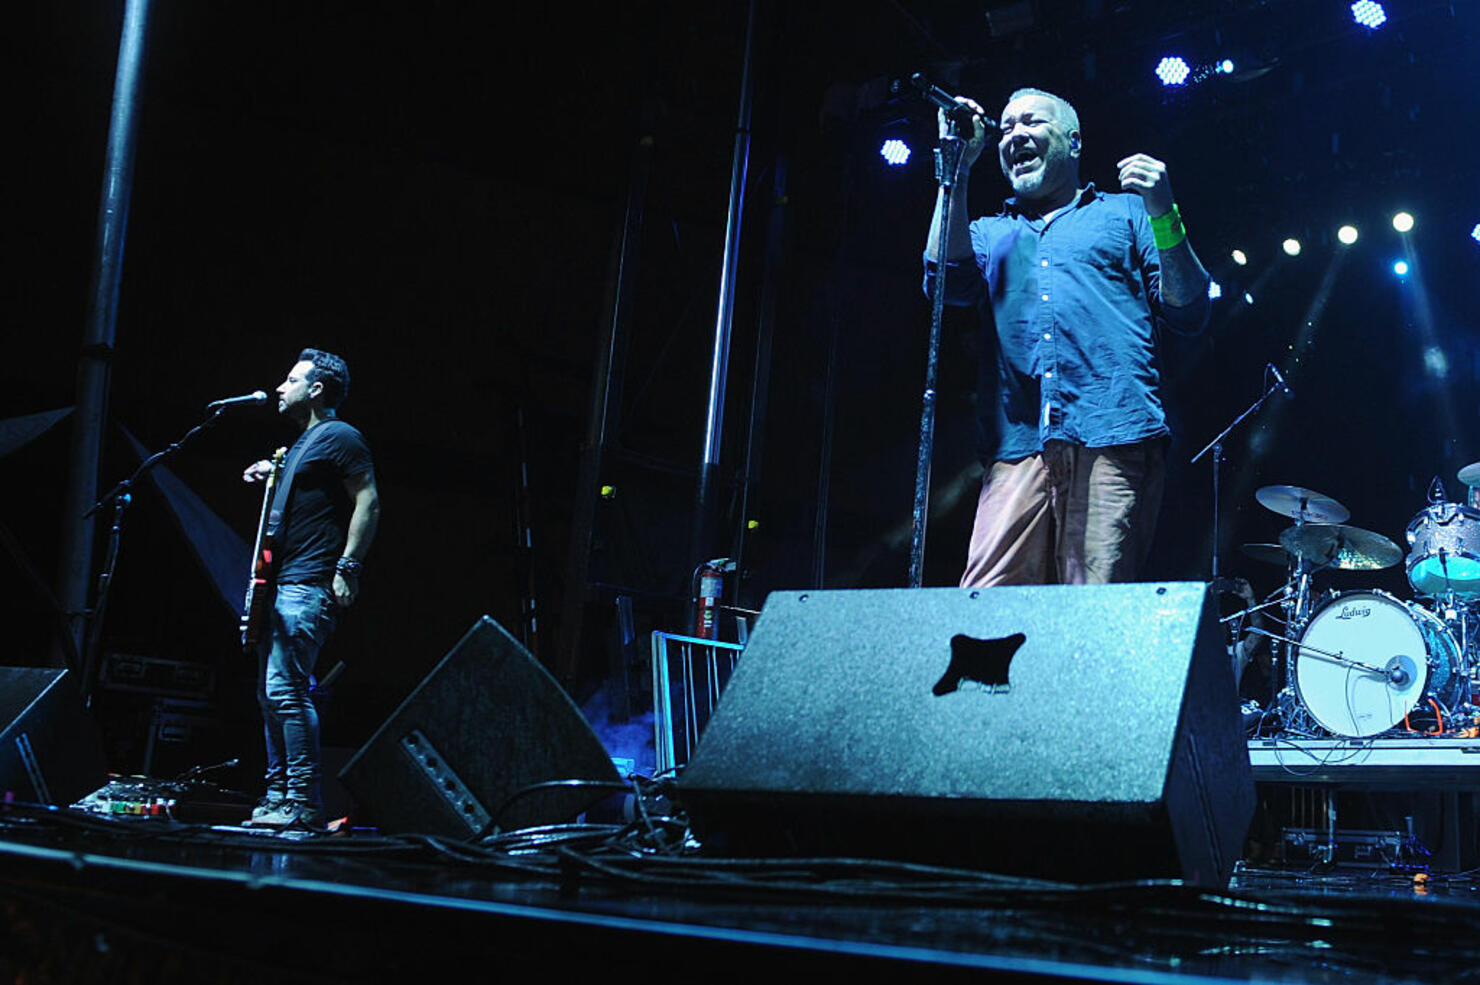 Smash Mouth singer curses fans, slurs words at concert - Los Angeles Times